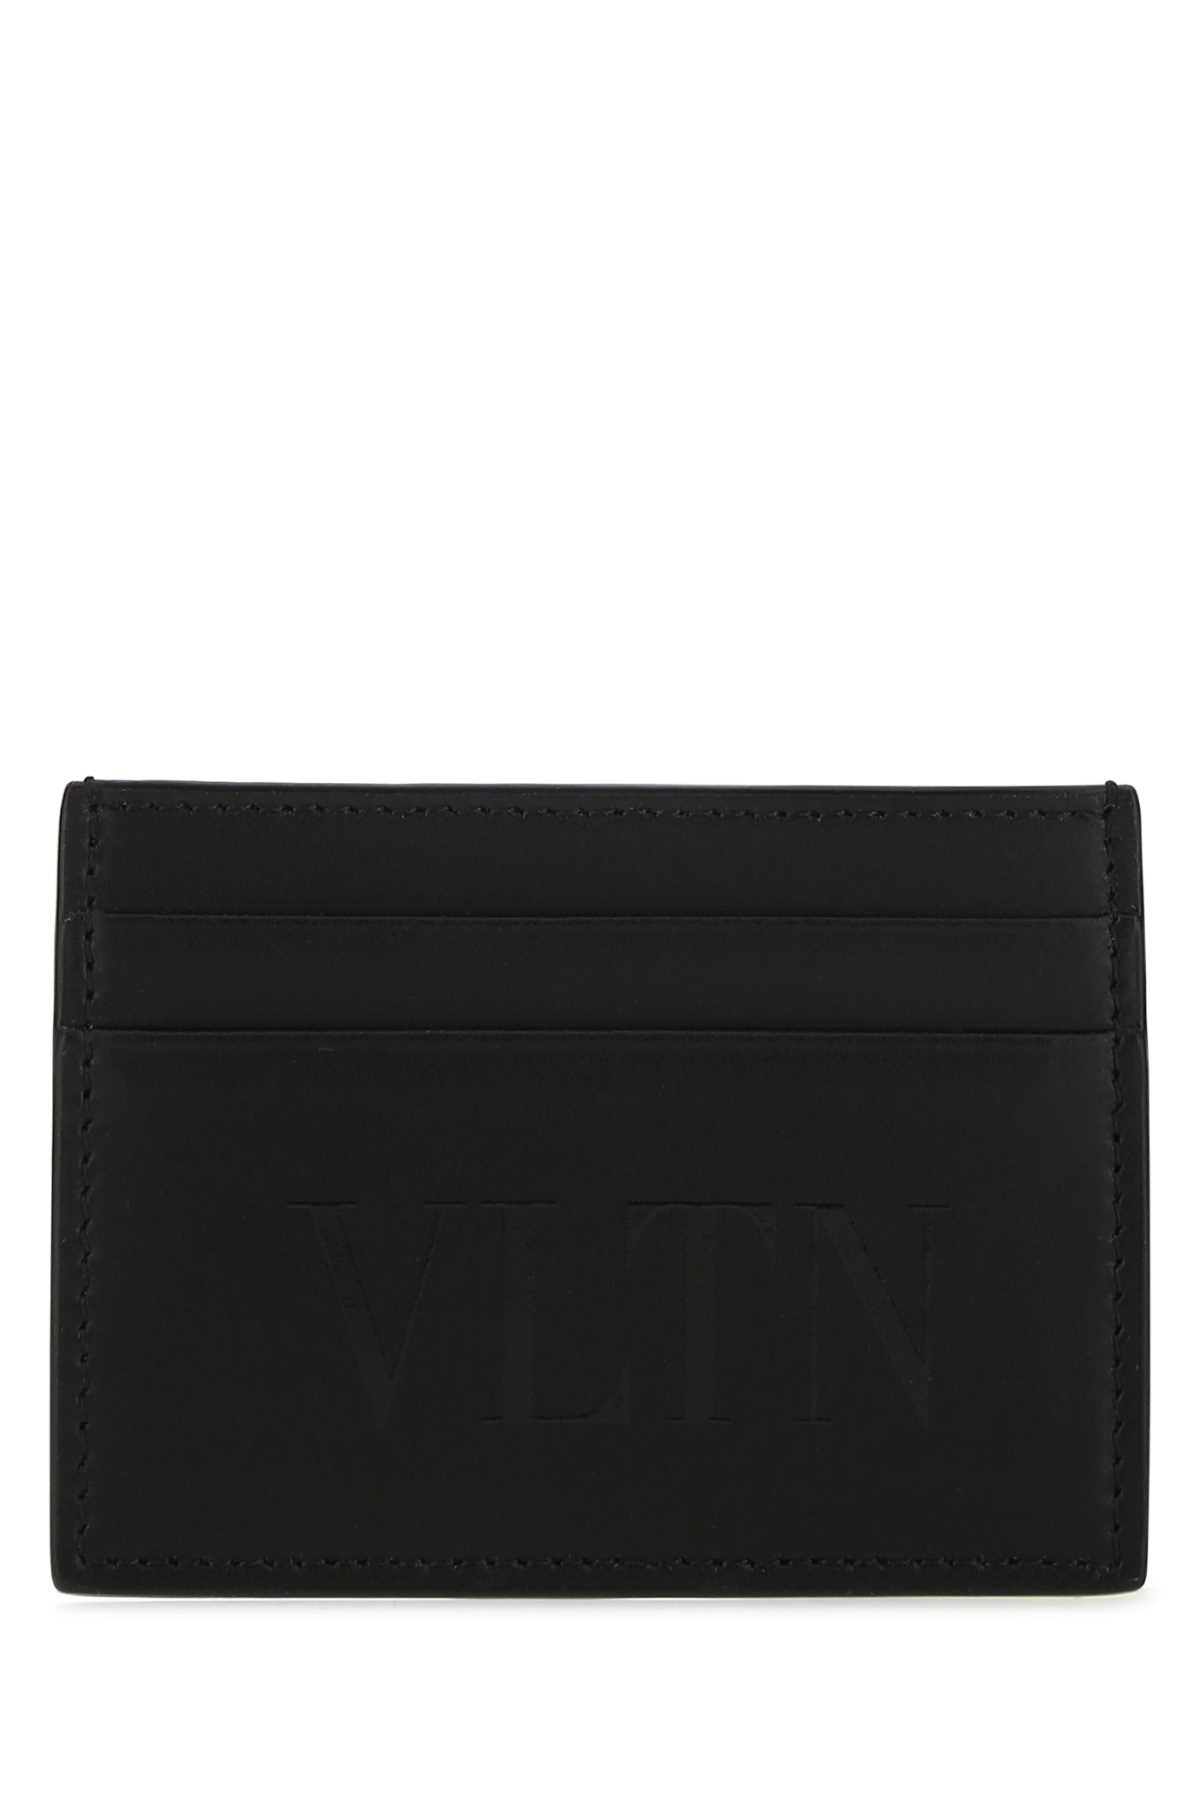 Valentino Garavani Black Leather Vltn Card Holder